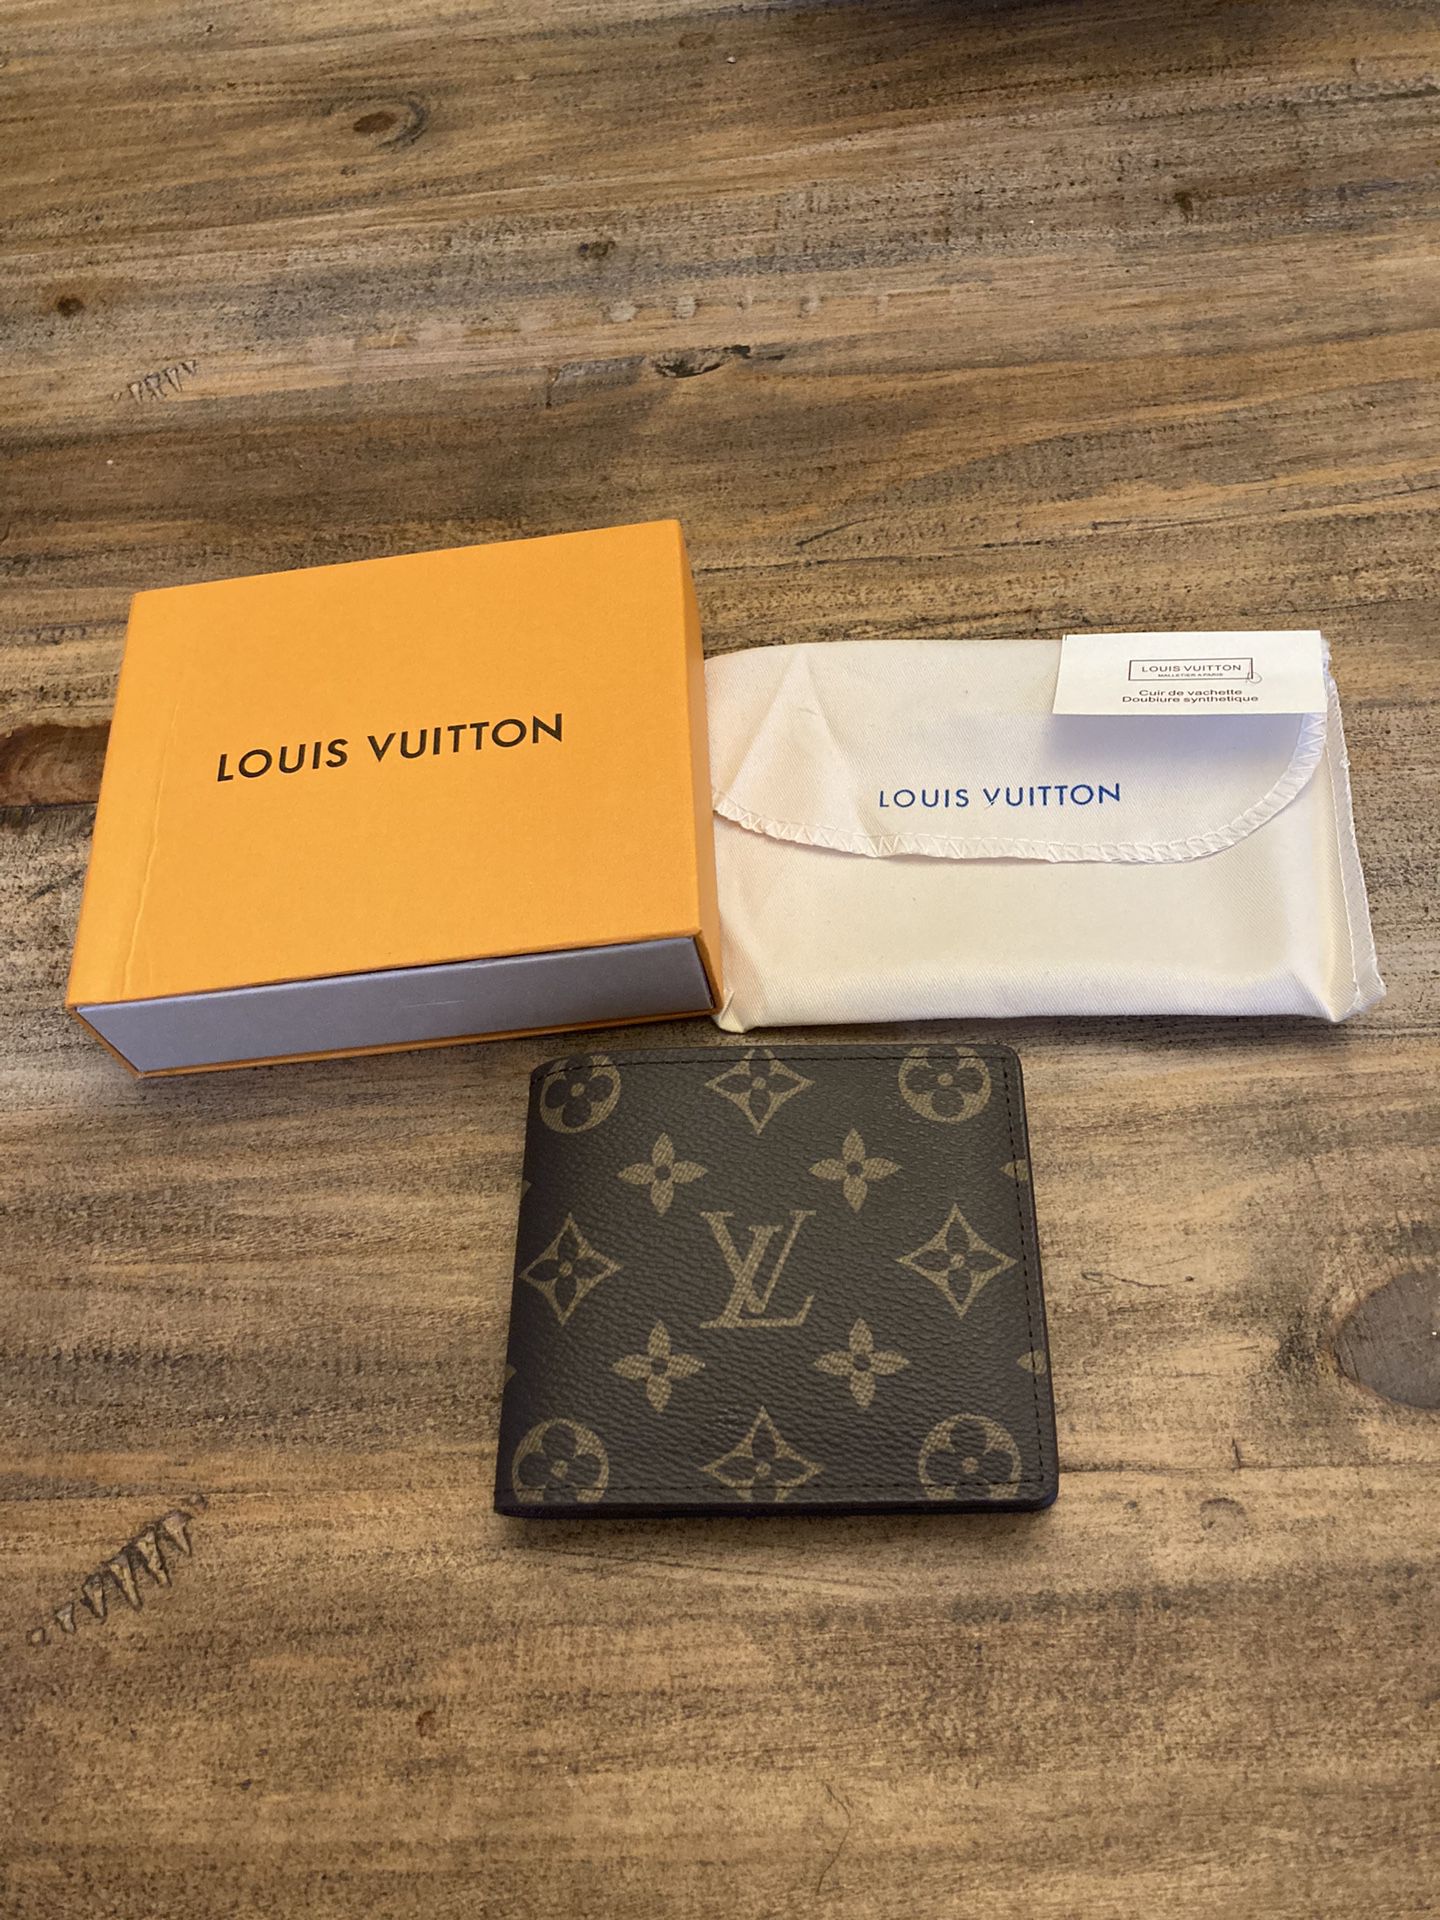 Louis Vuitton Wallets for sale in Fayetteville, Georgia